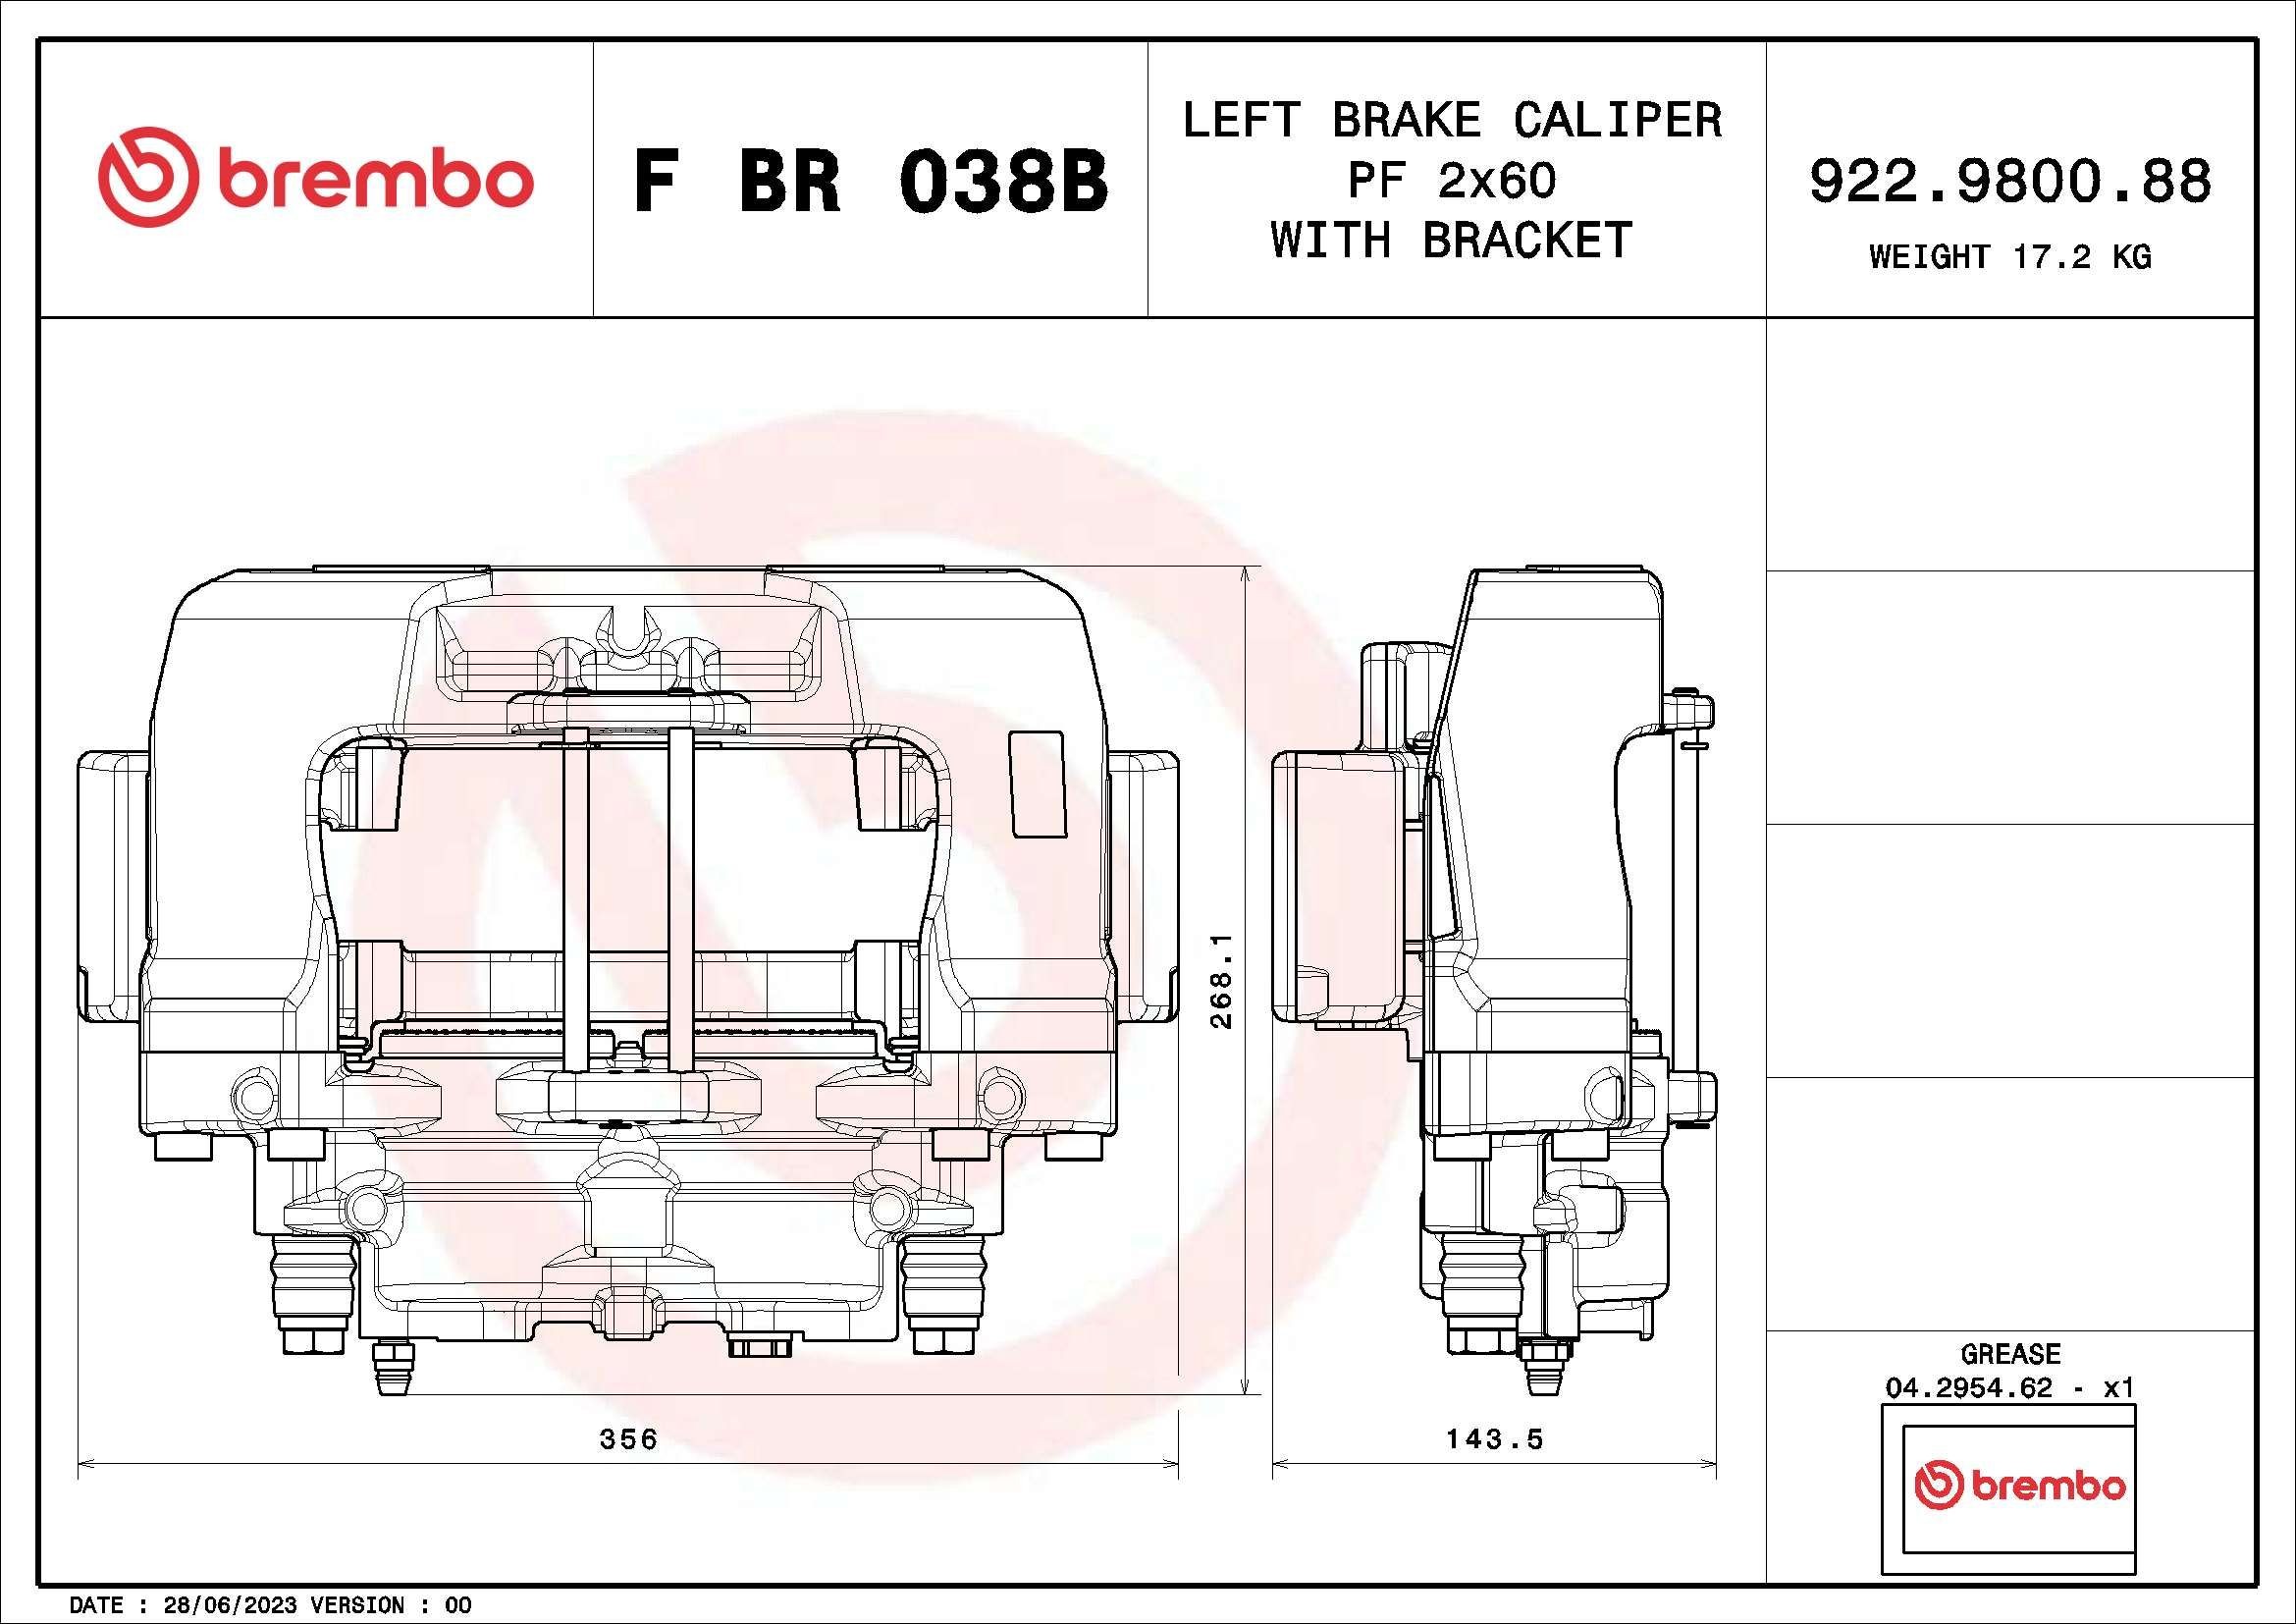 BREMBO Calipers F BR 038B